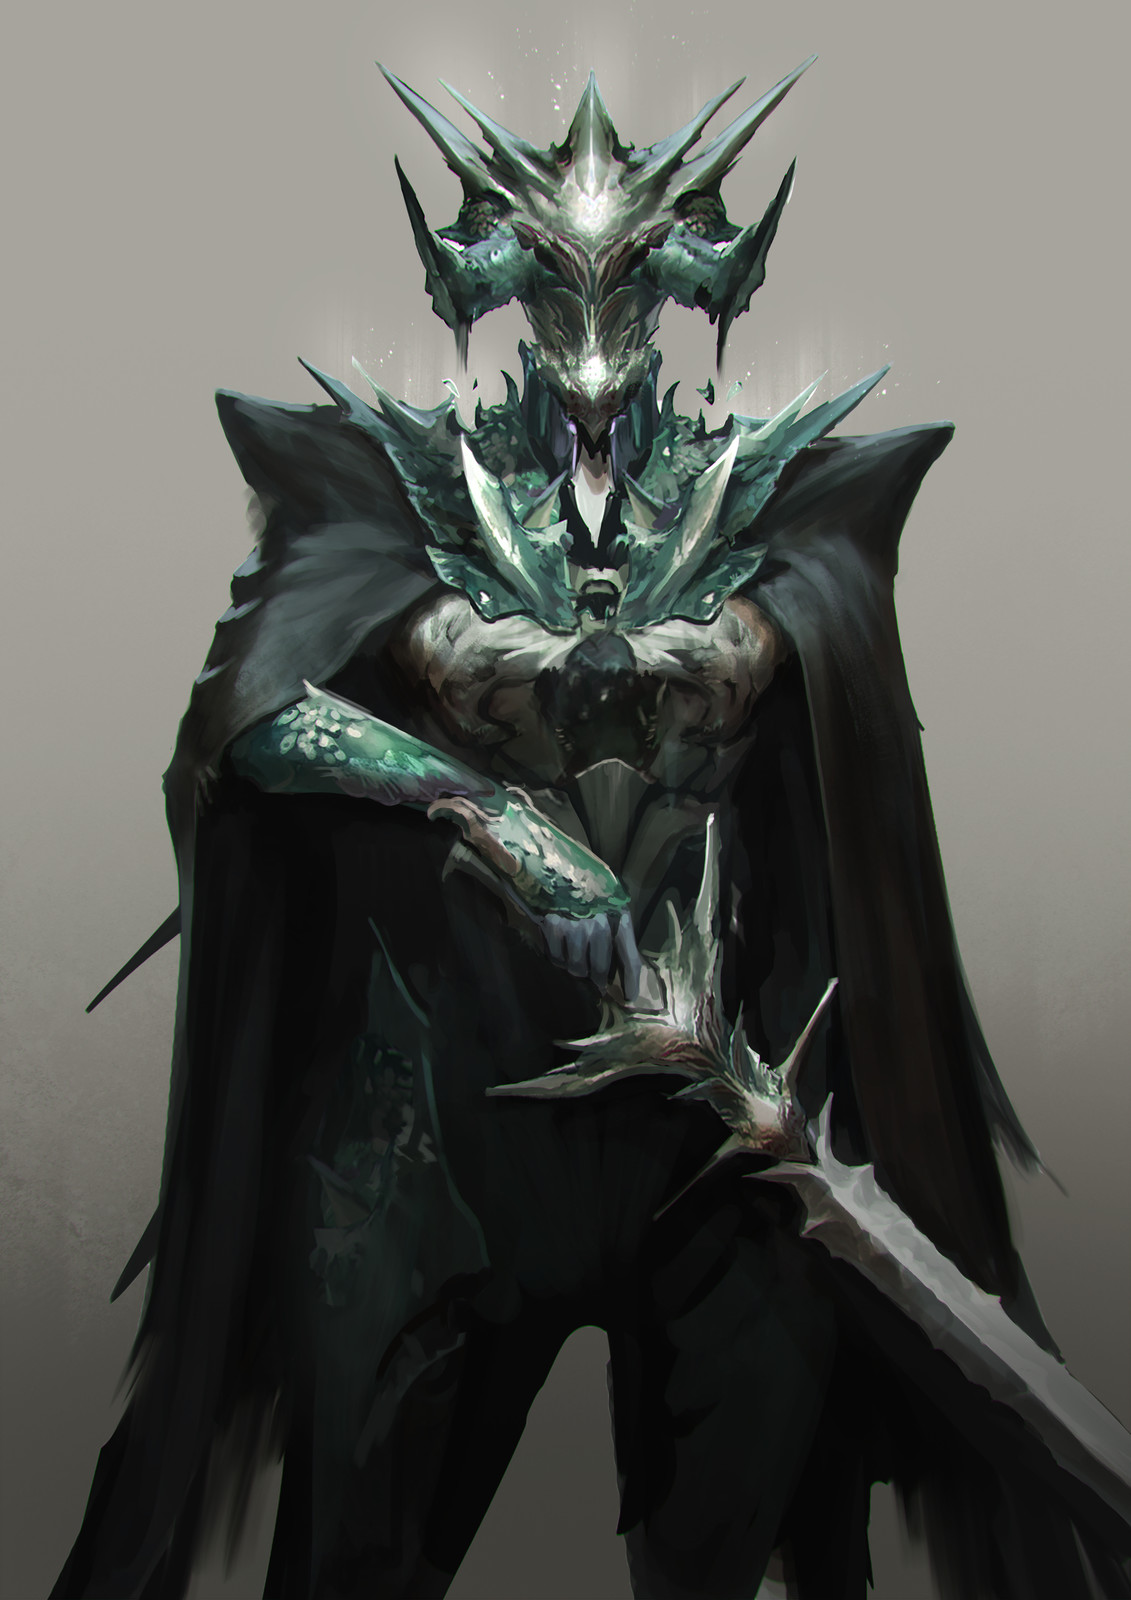 Demon Knight